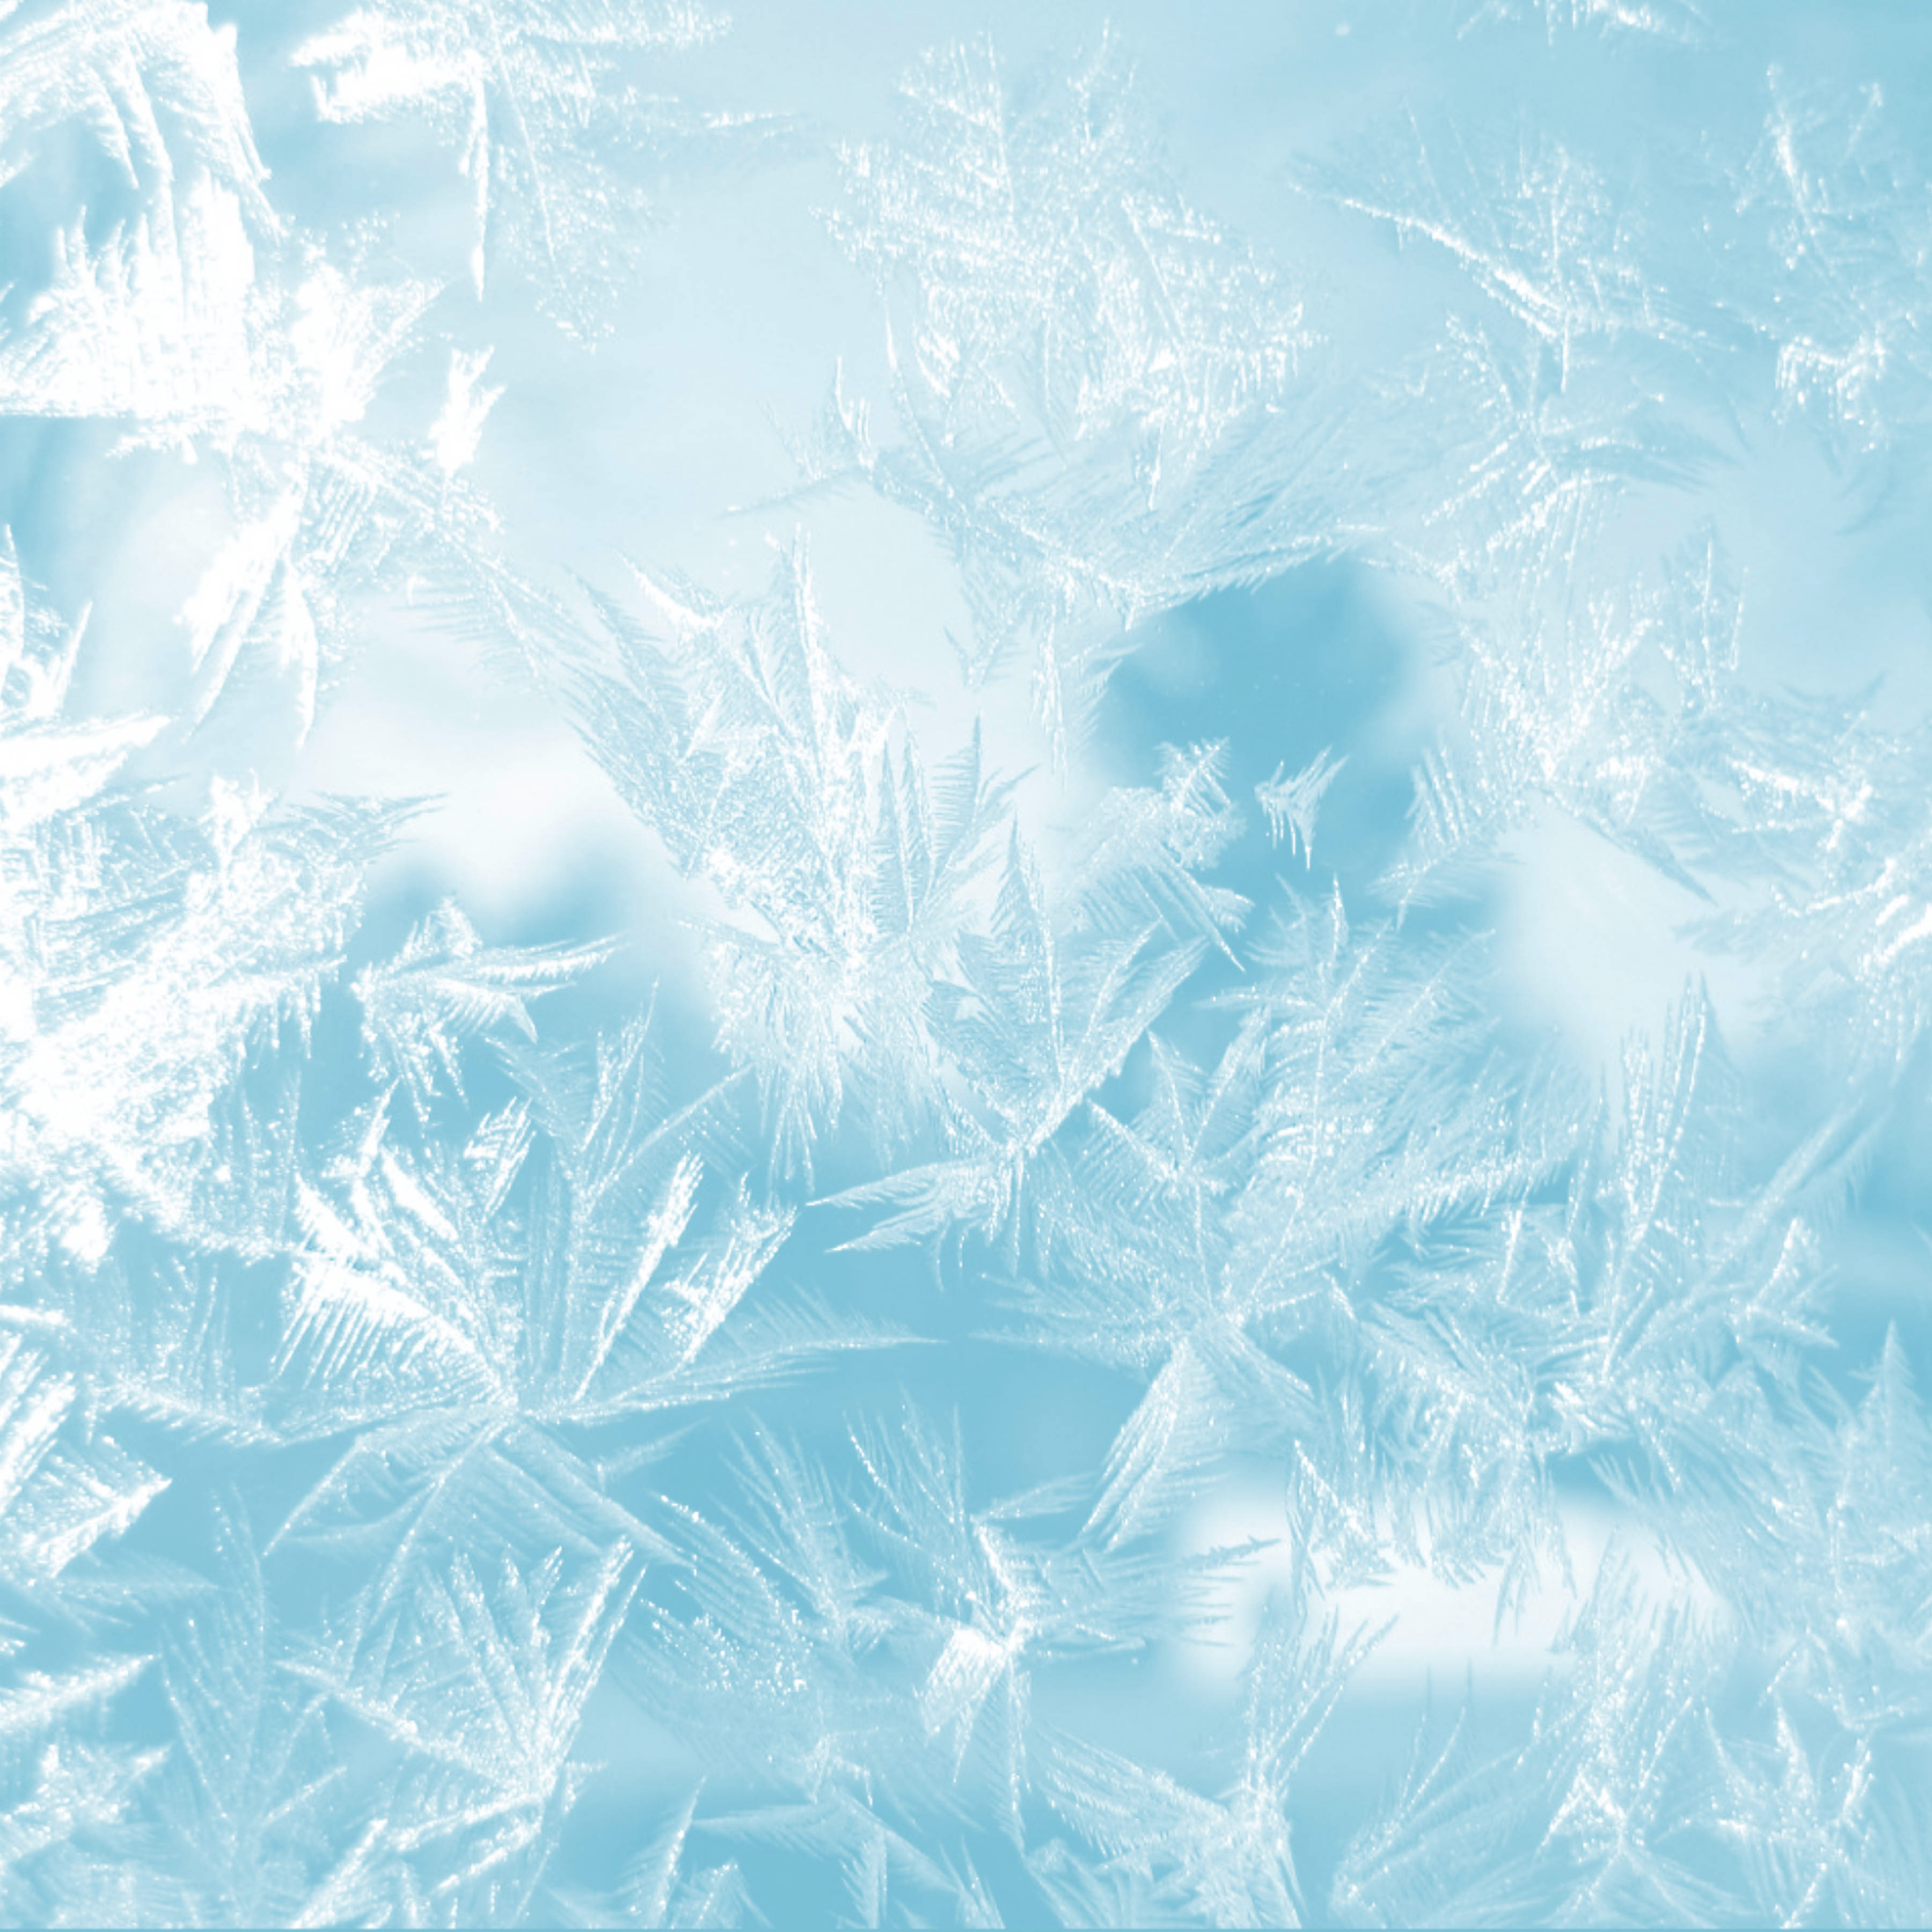 Frozen Icy Background.